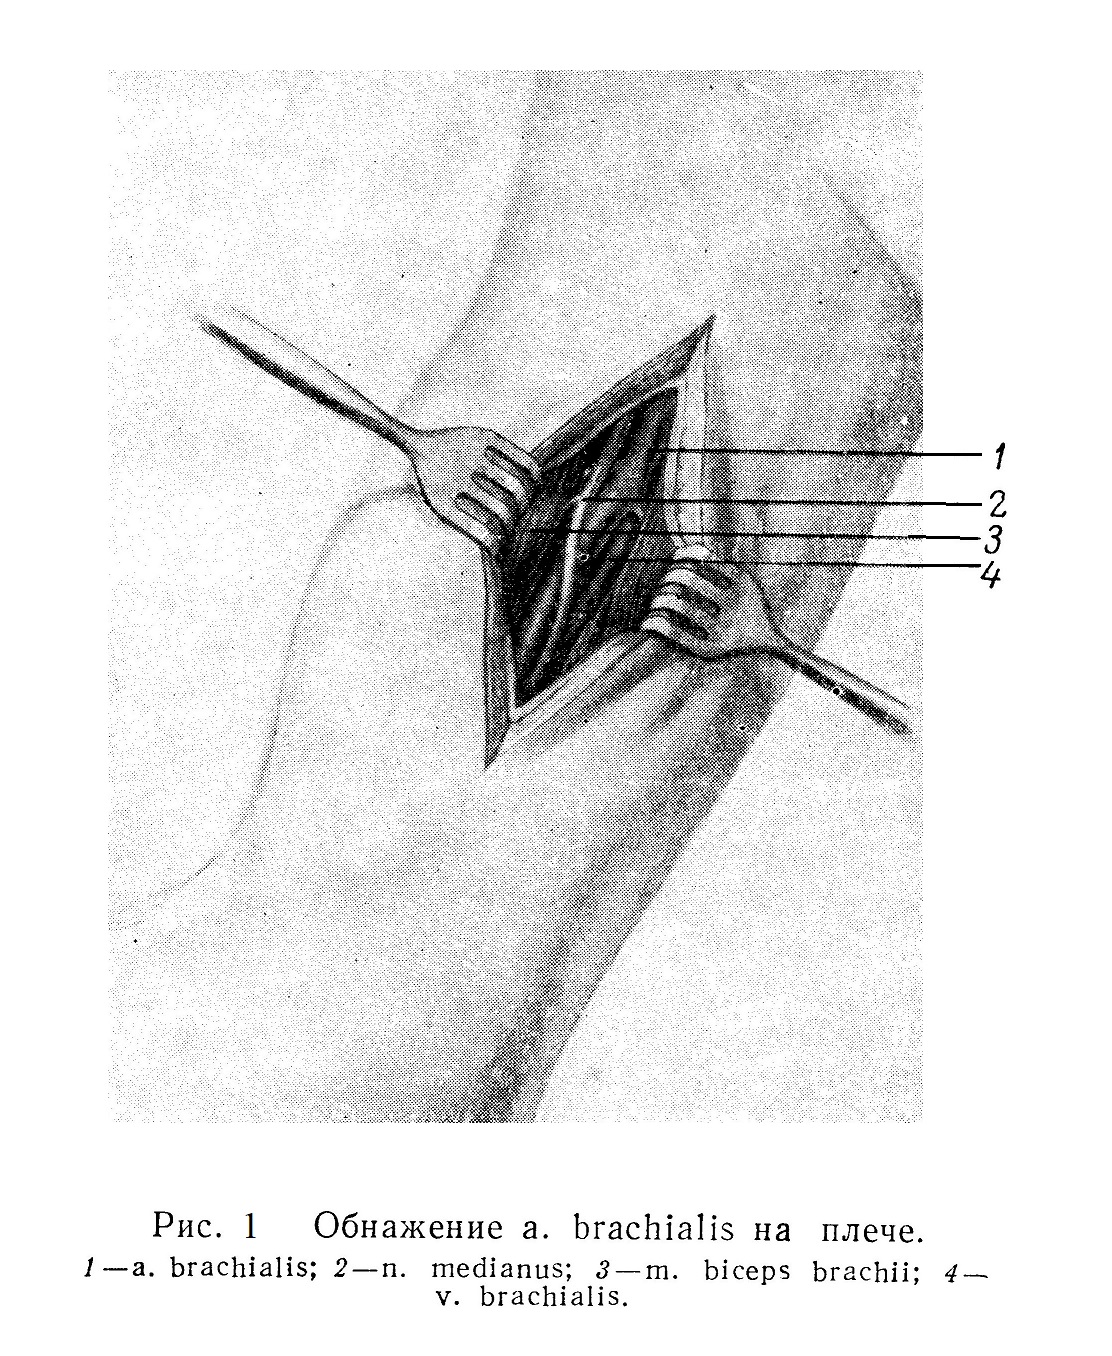 Перевязка плечевой артерии (а. brachialis)